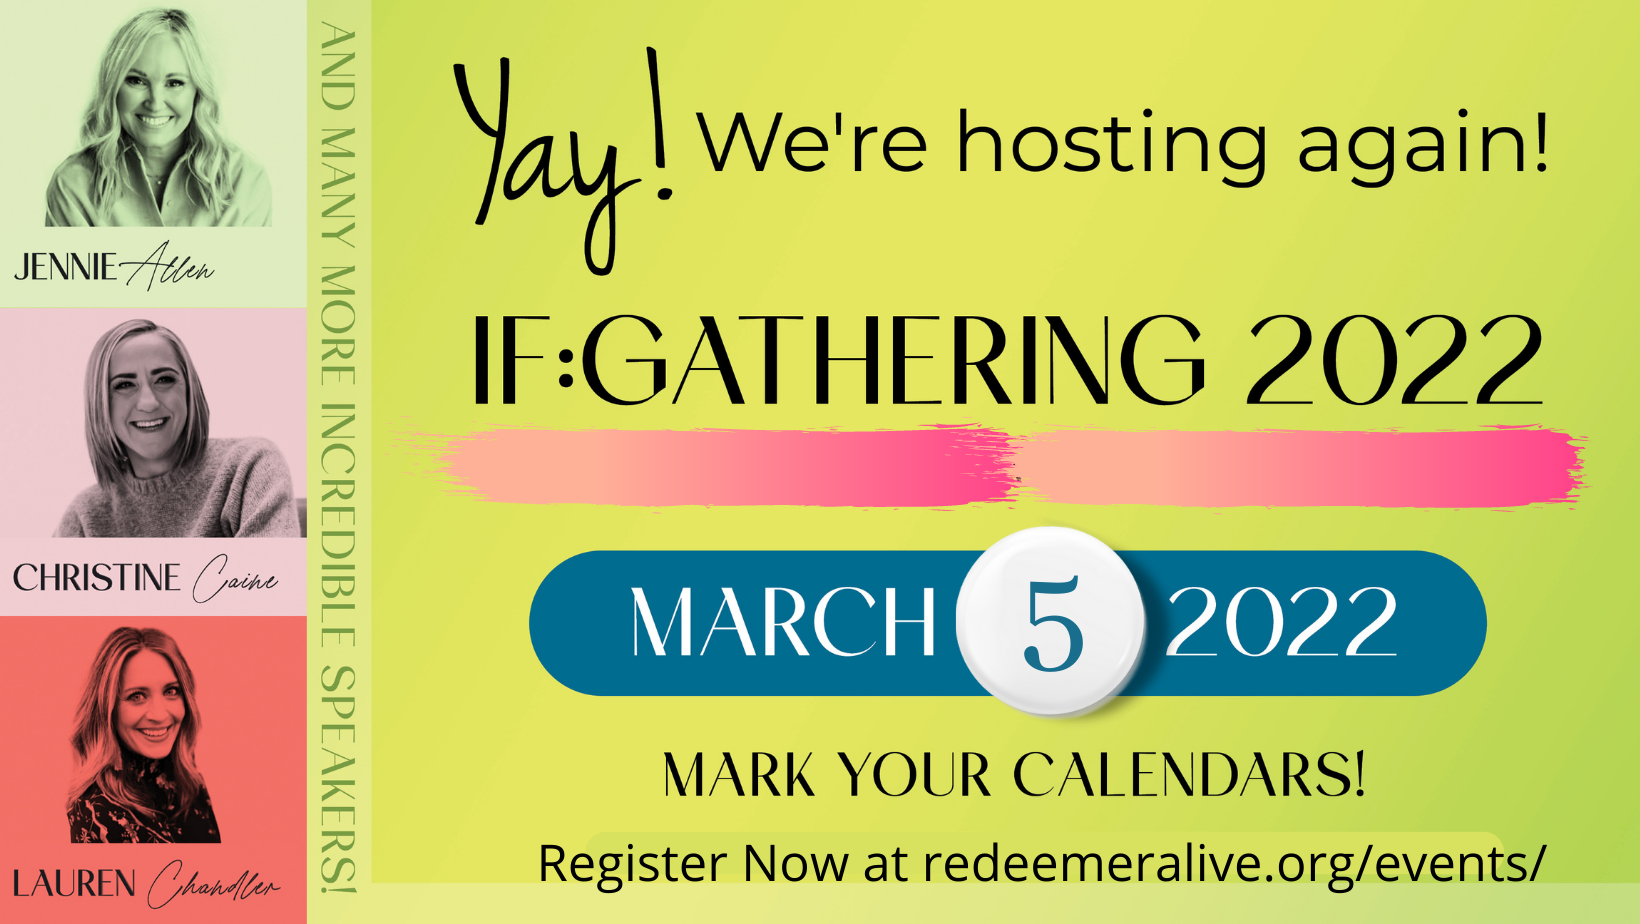 If Gathering 2022 Schedule If:gathering 2022 | Redeemer Lutheran Church